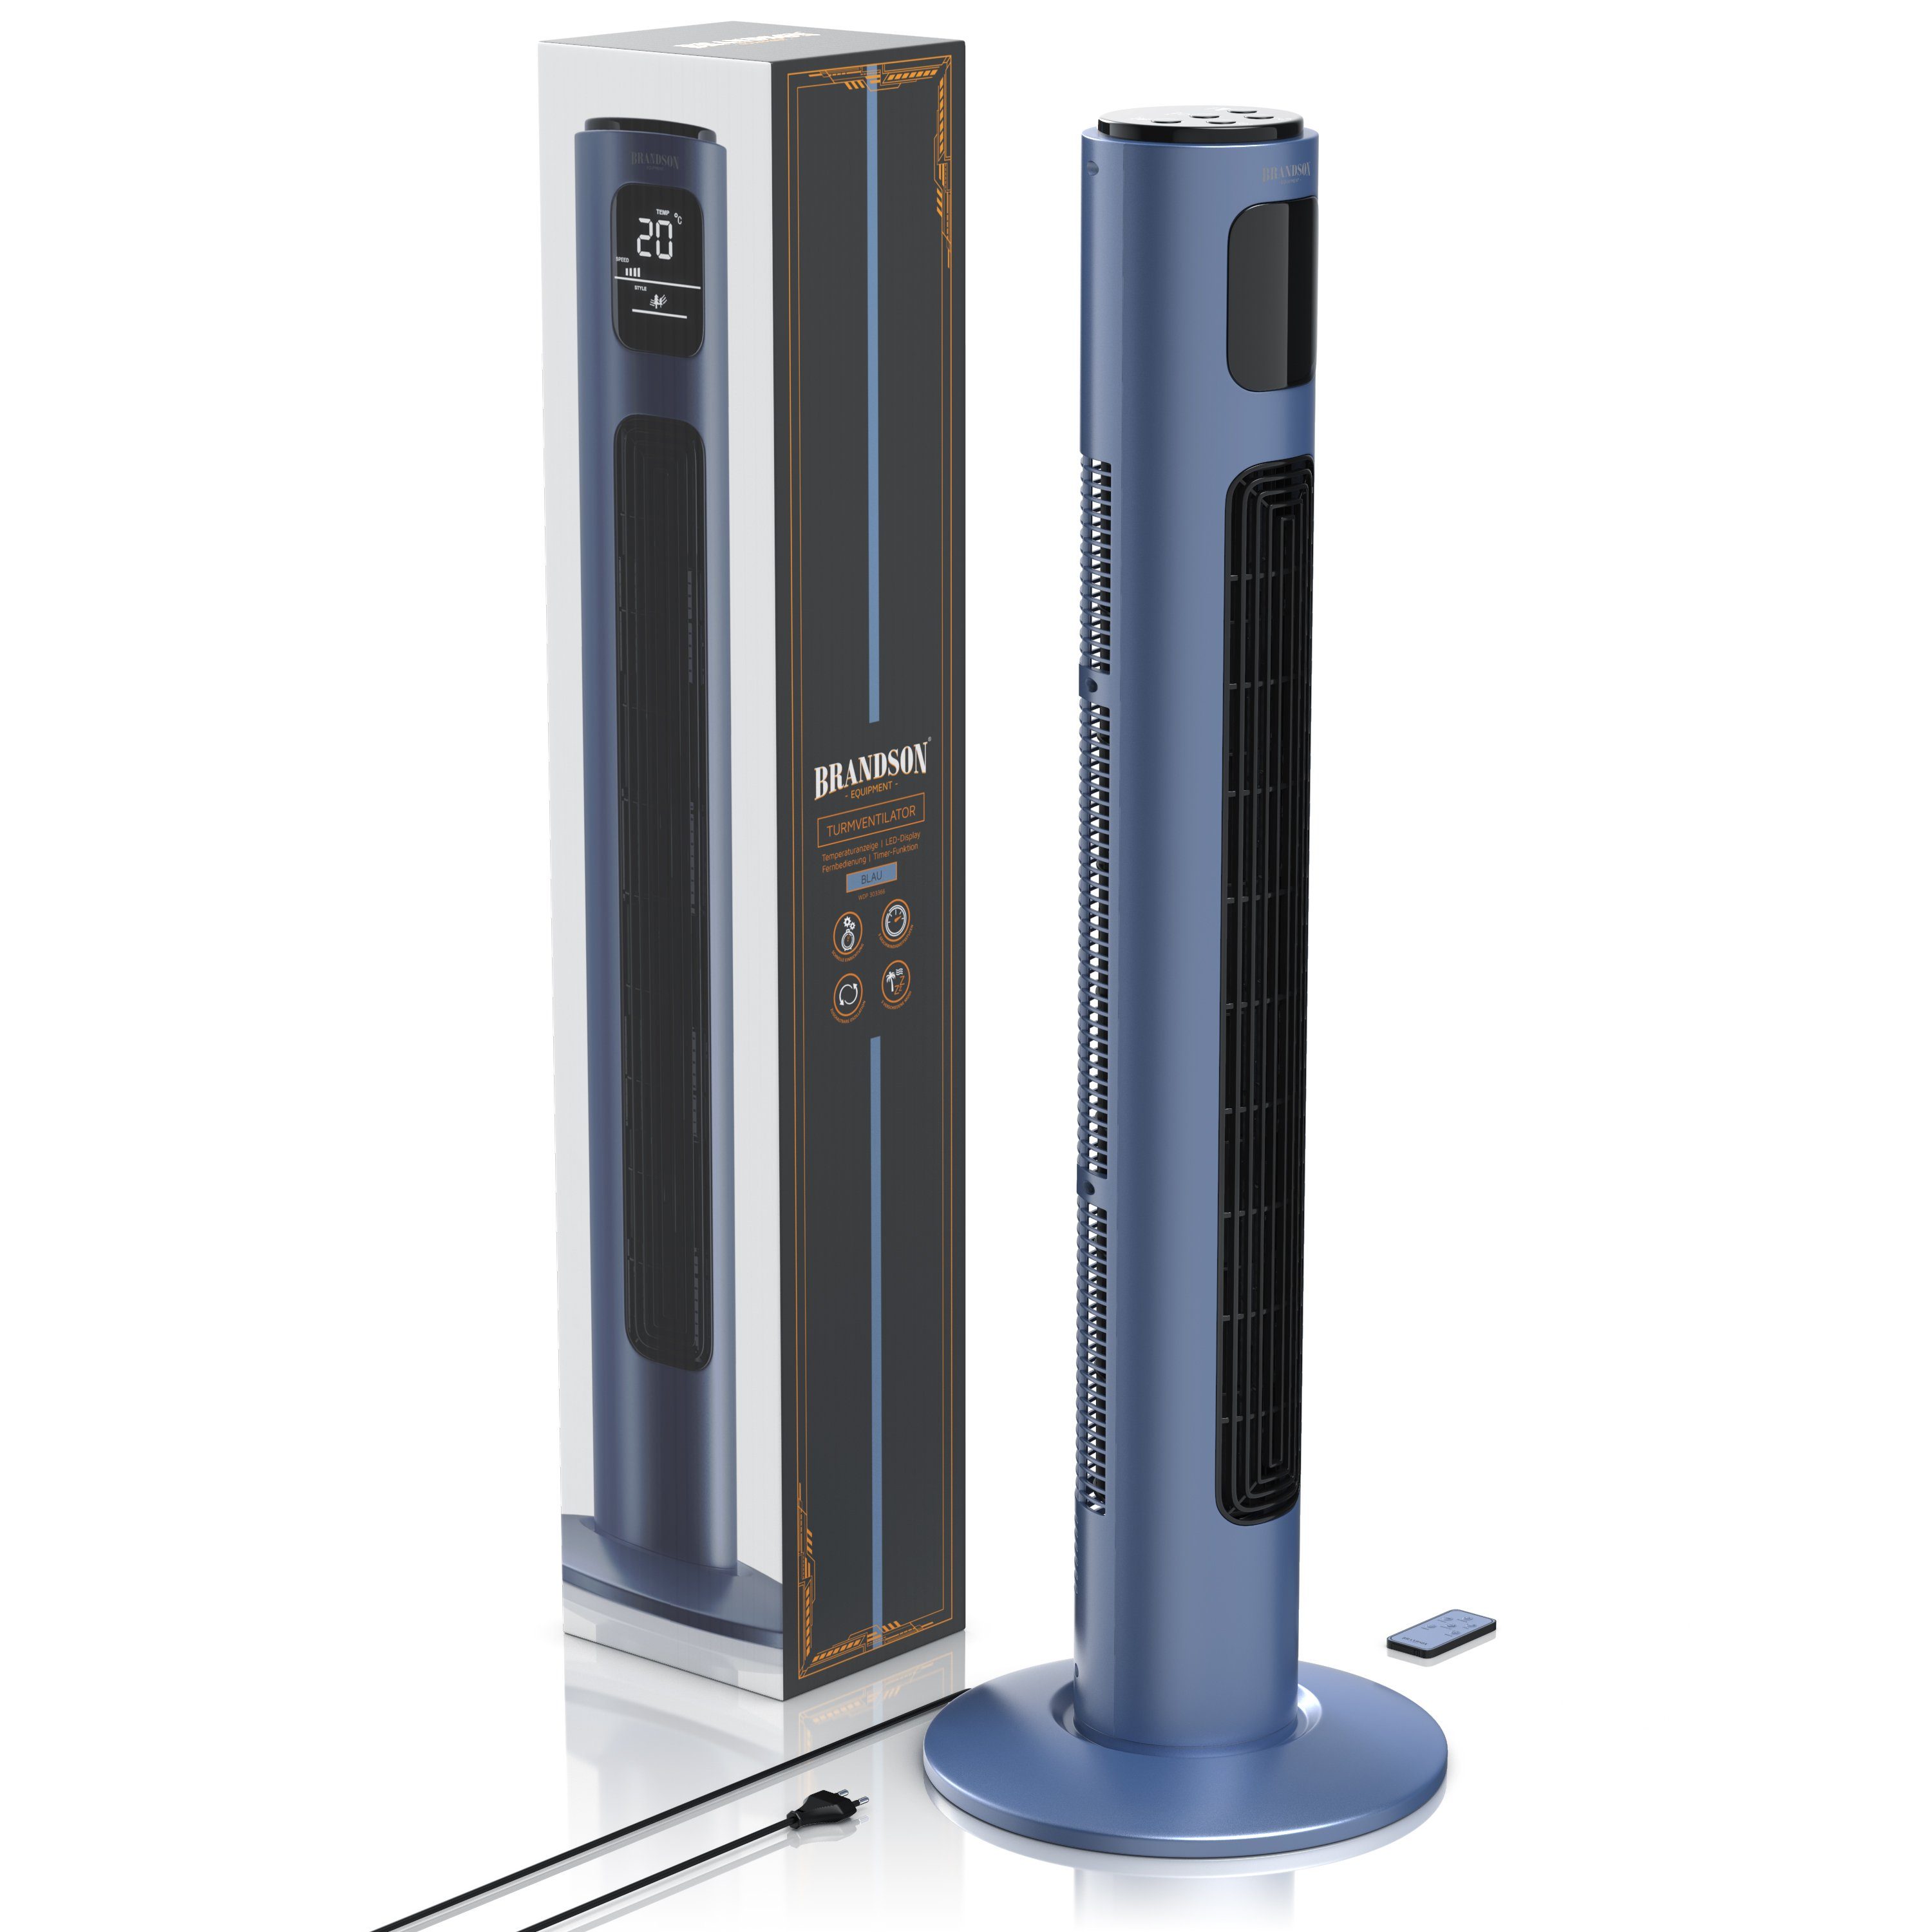 Brandson Turmventilator, Blau Oszillation 65°, Standventilator Fernbedienung, 96cm, Timer